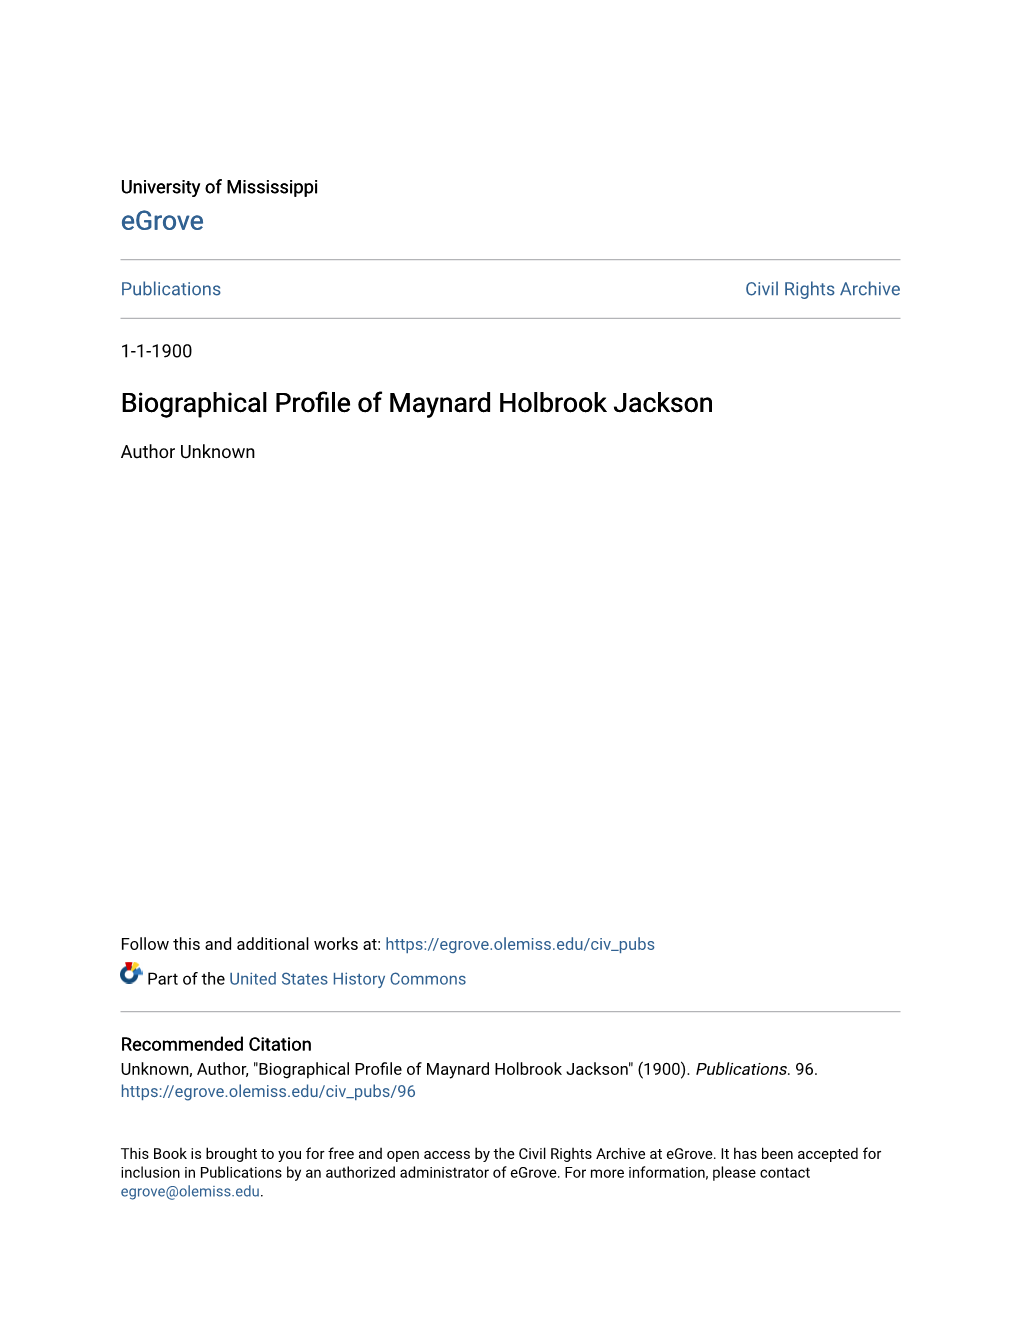 Biographical Profile of Maynard Holbrook Jackson